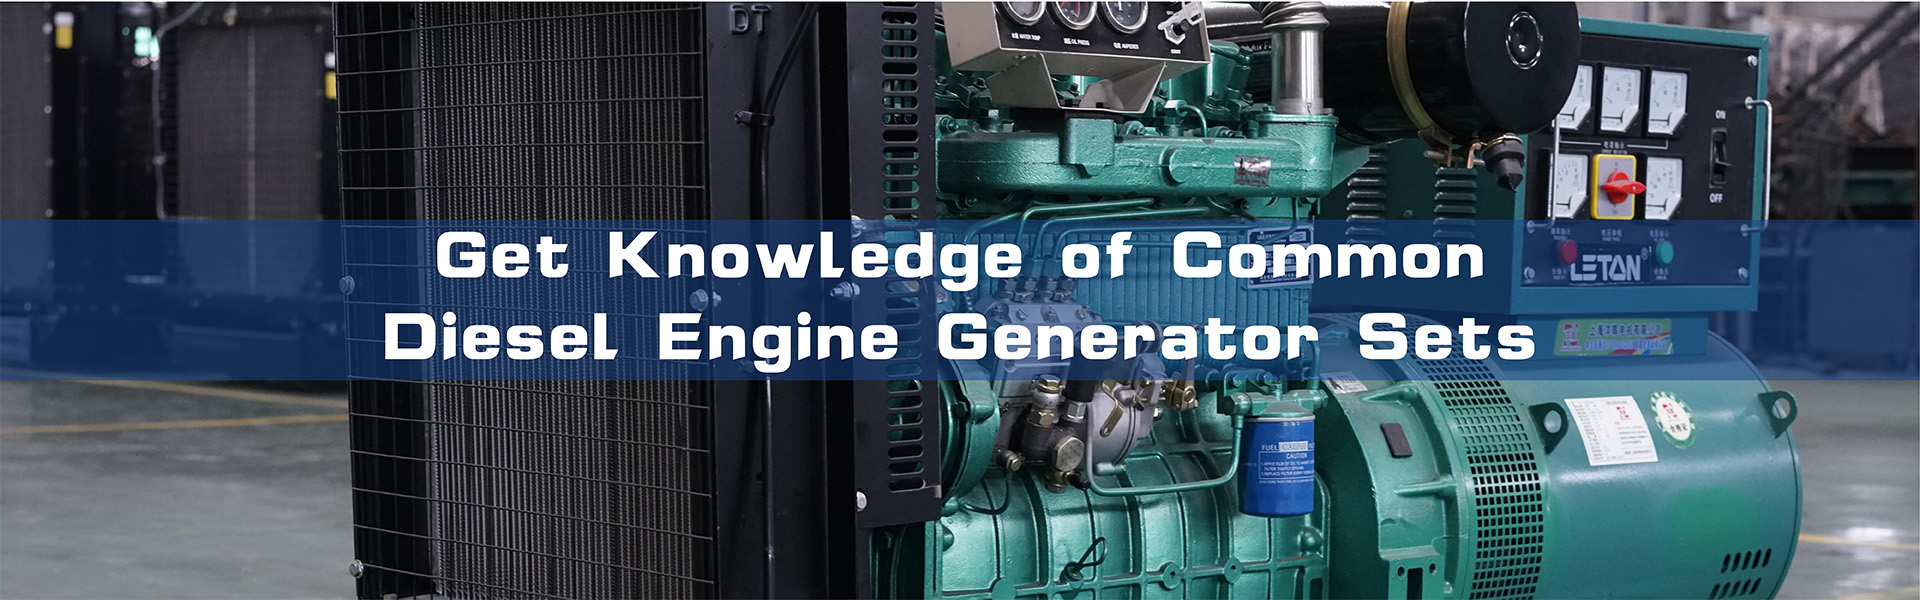 Få kunskap om vanliga dieselmotorgeneratorer